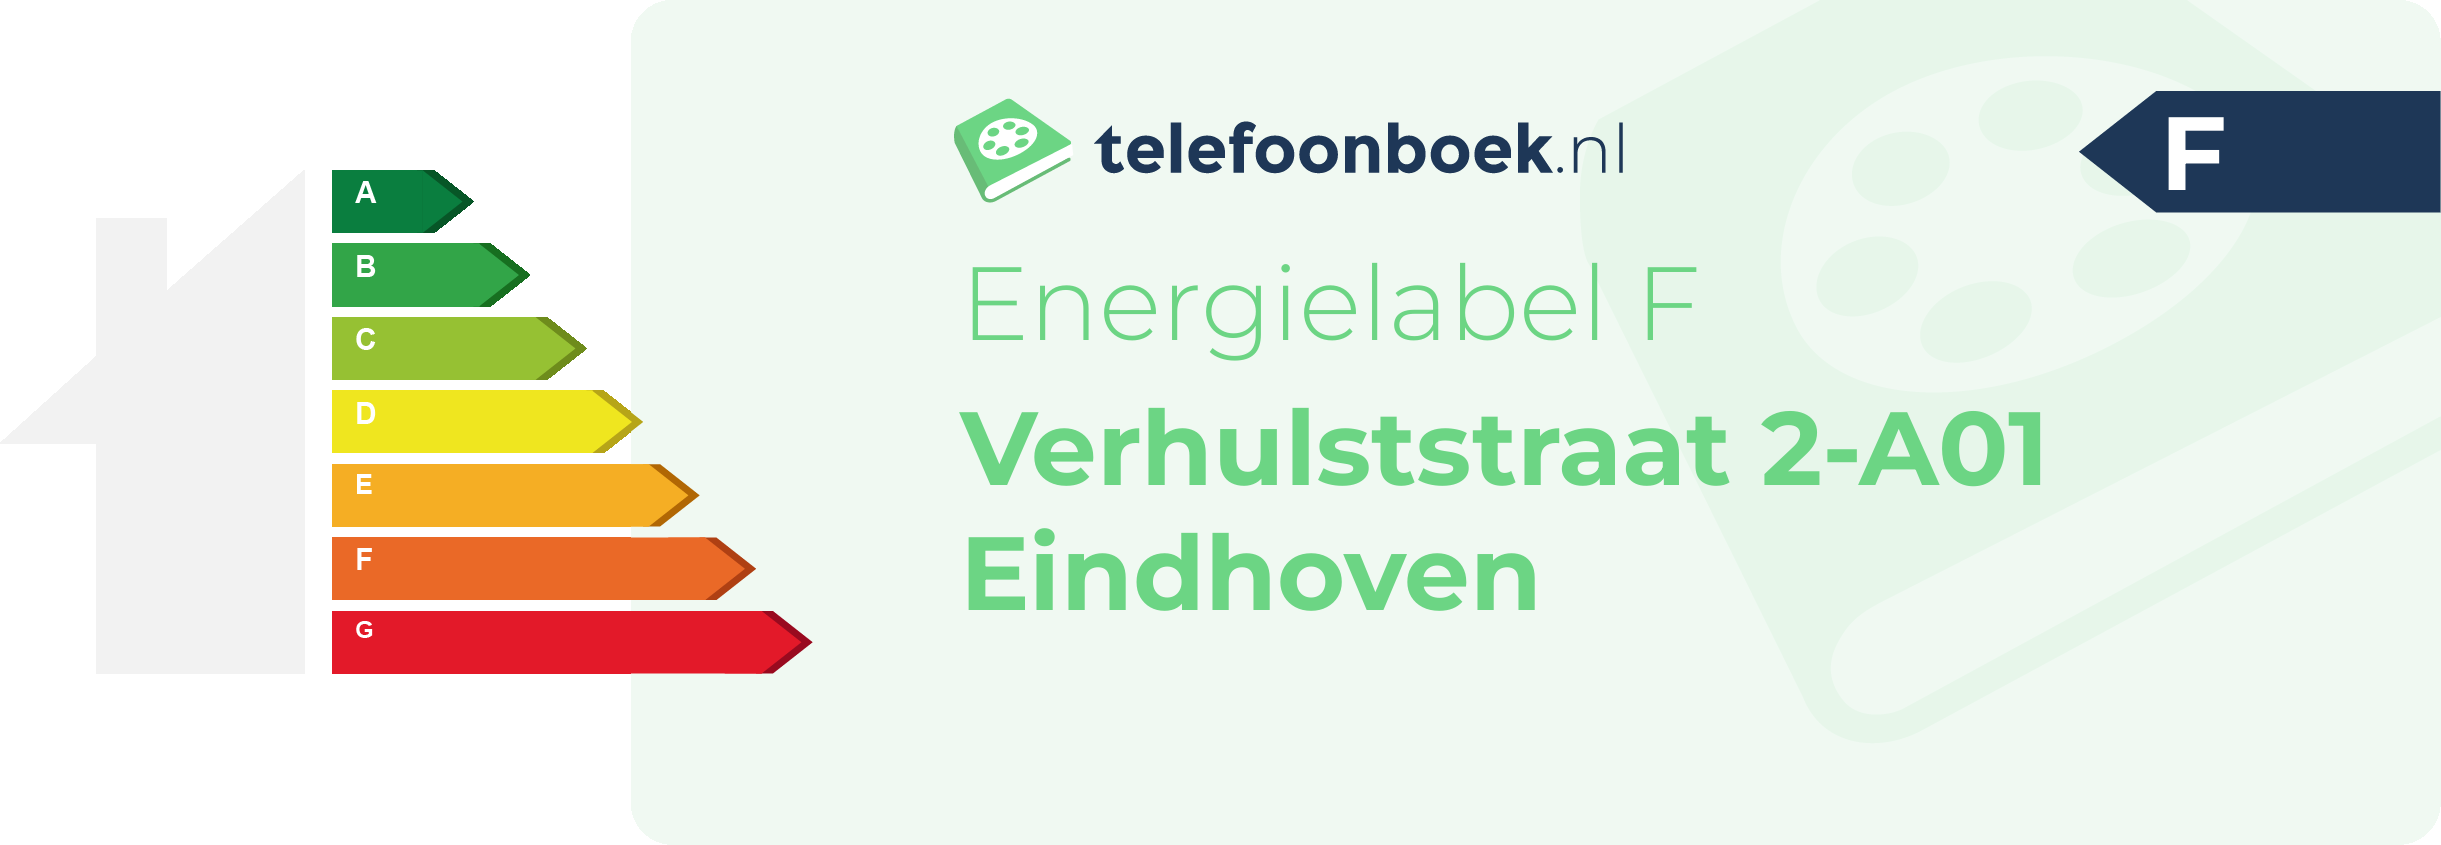 Energielabel Verhulststraat 2-A01 Eindhoven